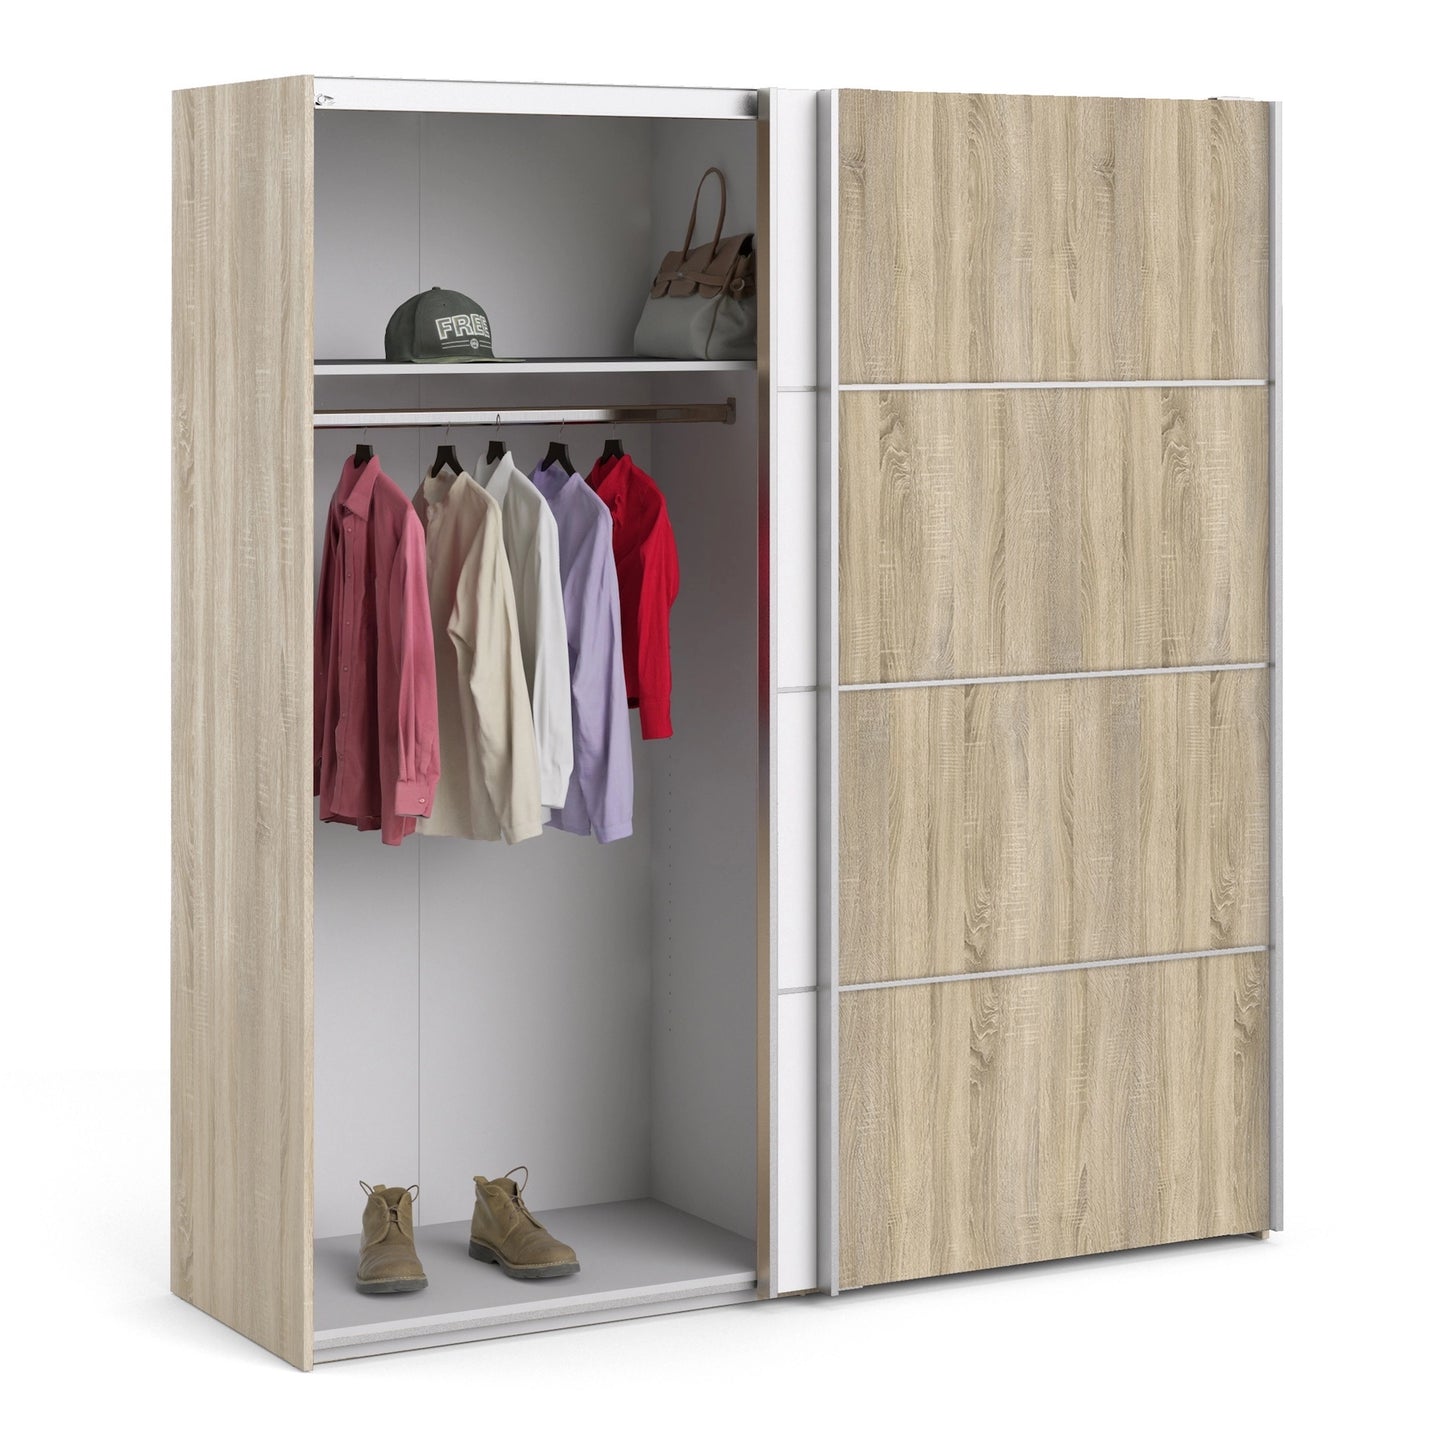 Furniture To Go Verona Sliding Wardrobe 180cm in Oak with White & Oak Doors with 5 Shelves